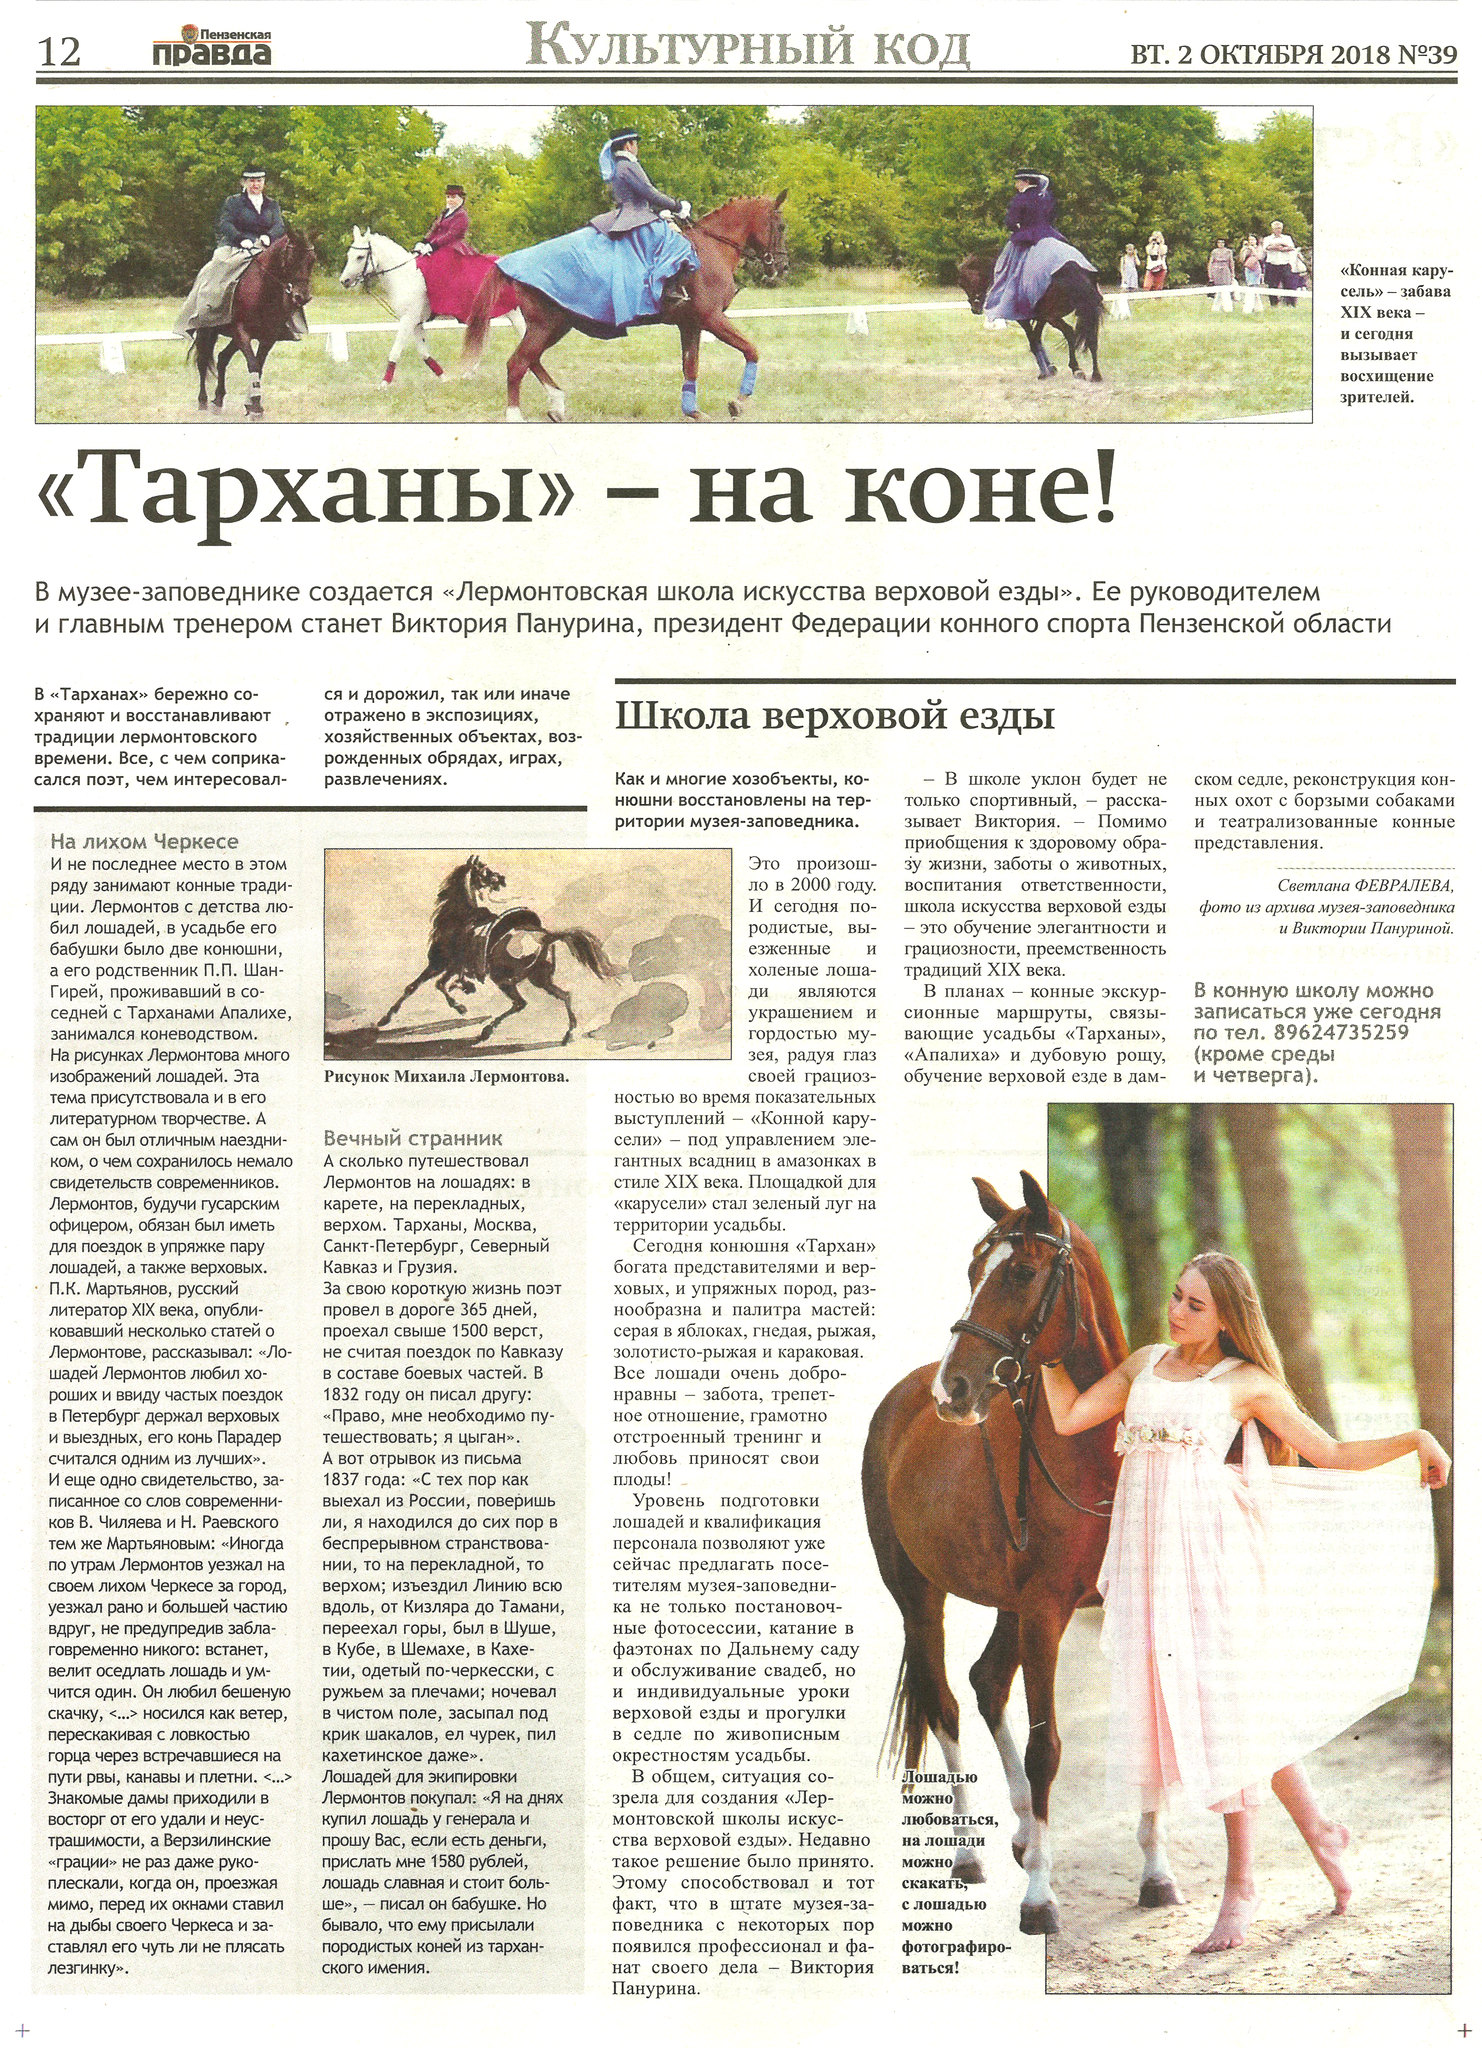 «Пензенская Правда», вт. 2 октября 2018 года № 39. «"Тарханы" – на коне!»